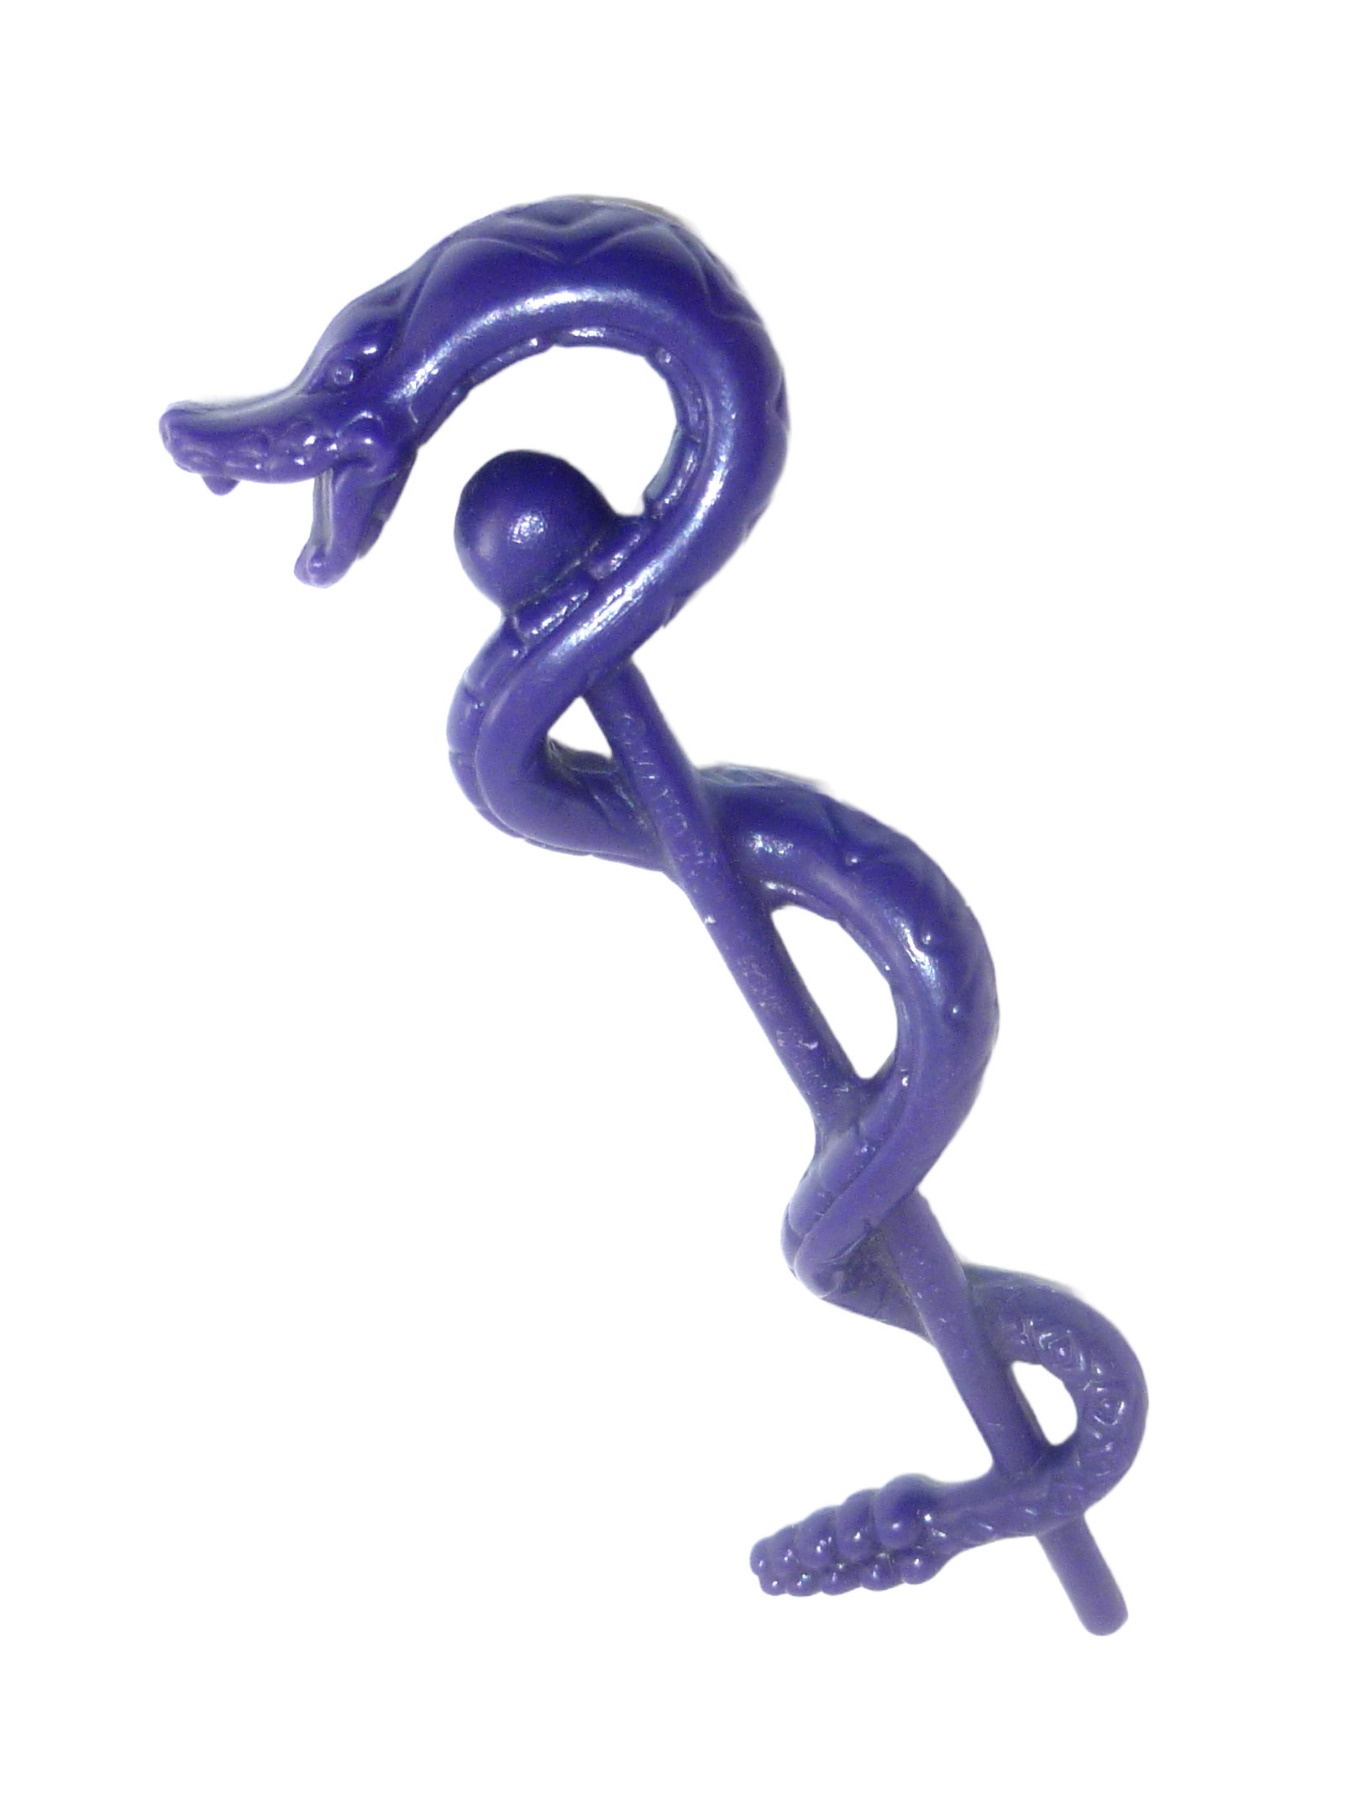 Tung Lashor Serpent Staff / Weapon